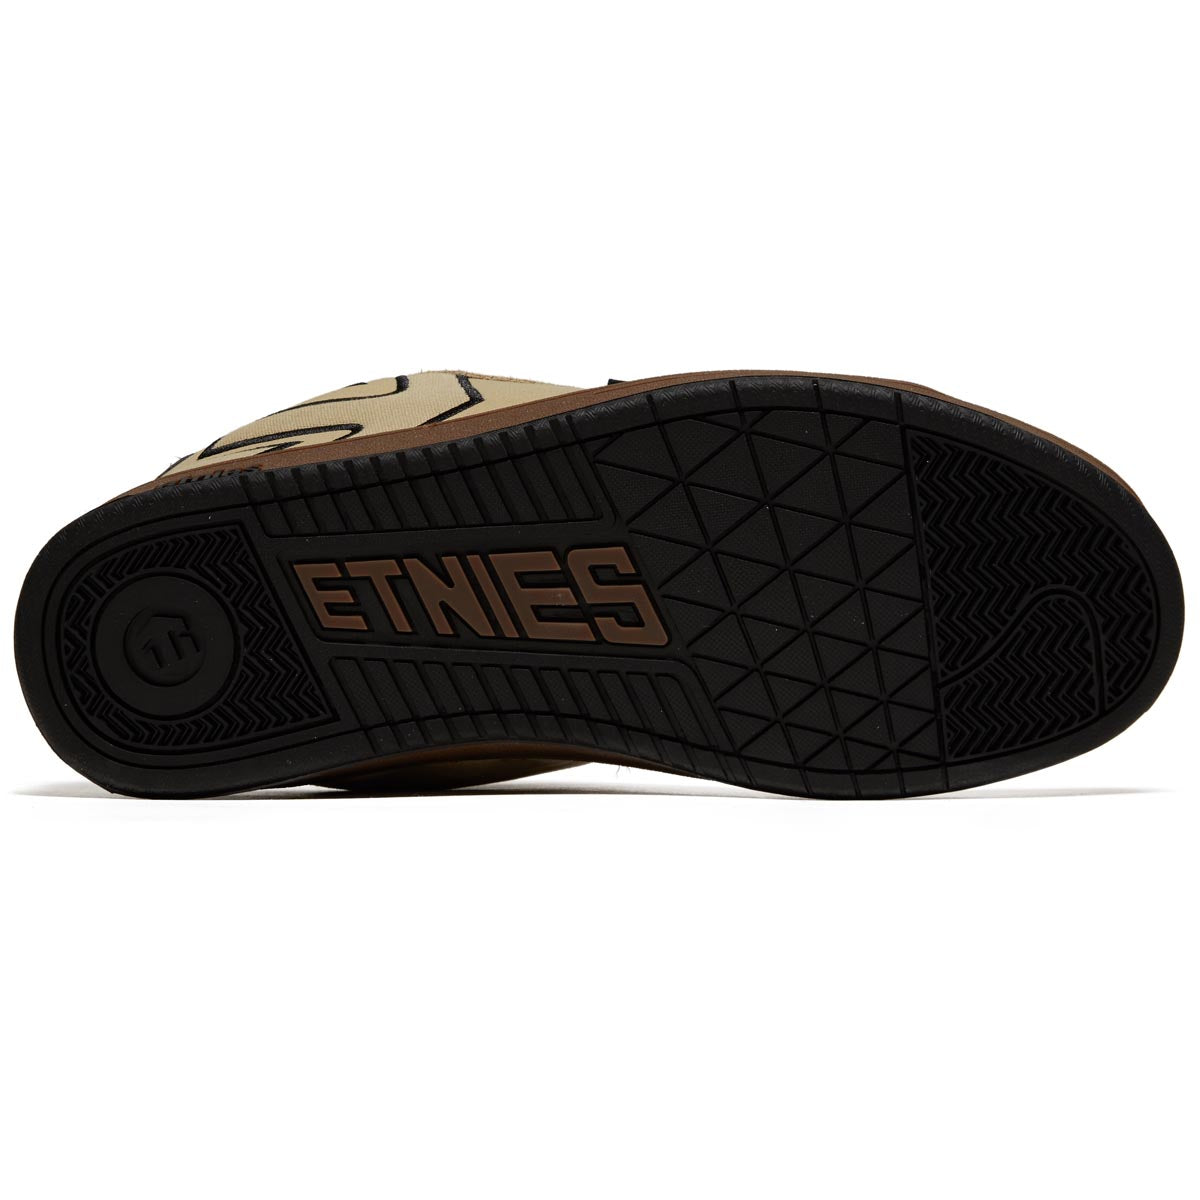 Etnies Fader Shoes - Tan/Gum image 4